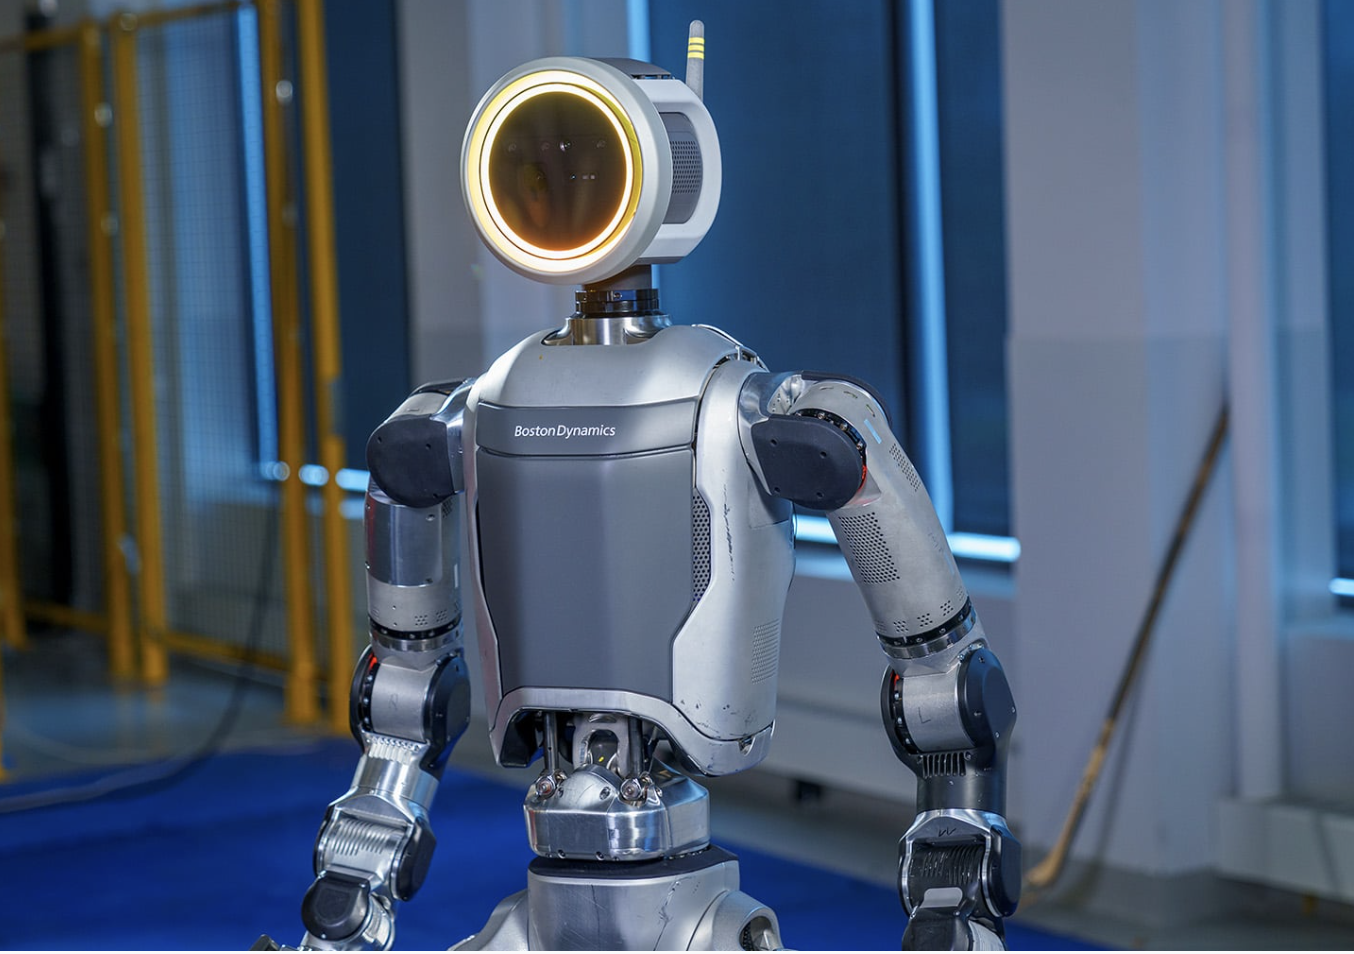  Meet Electric Atlas: A New Era of Robotics by Boston Dynamics